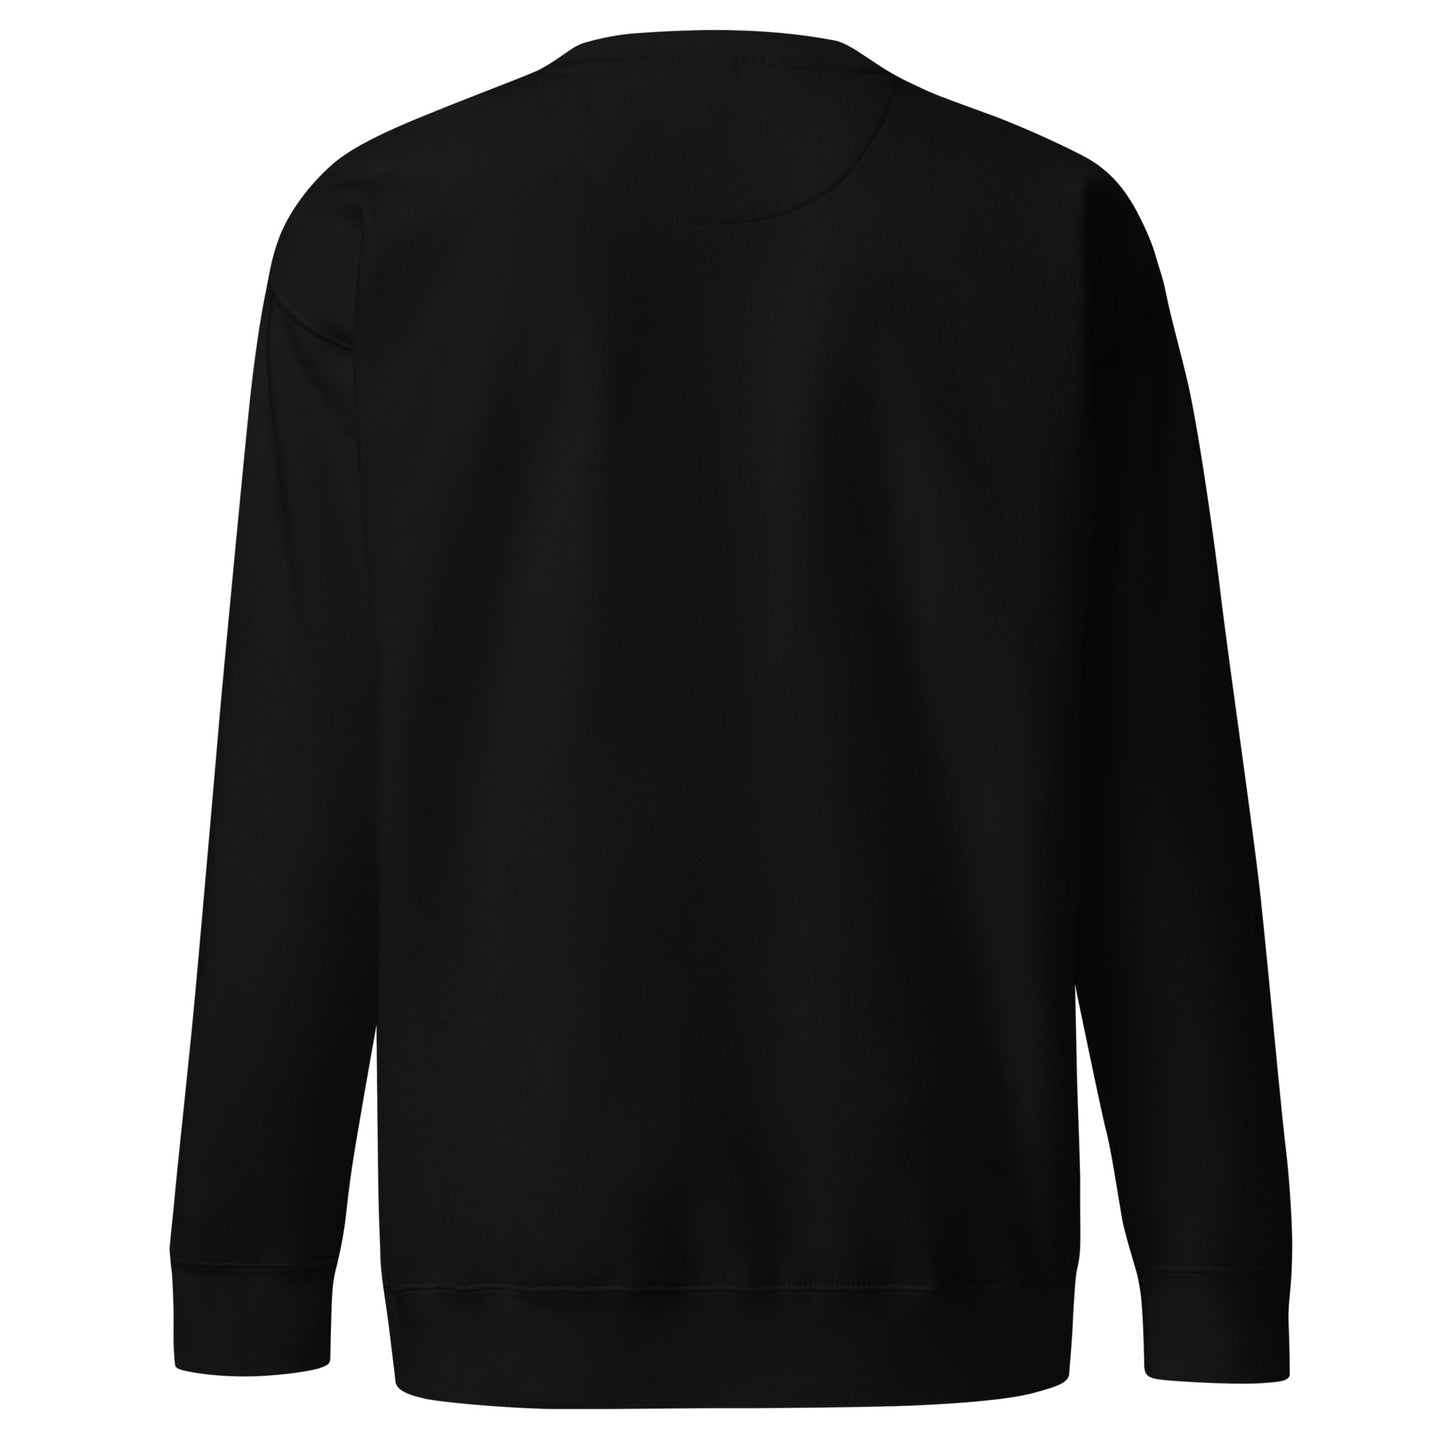 back sweatshirt Logo black by B.Different Clothing independent streetwear brand inspired by street art graffiti